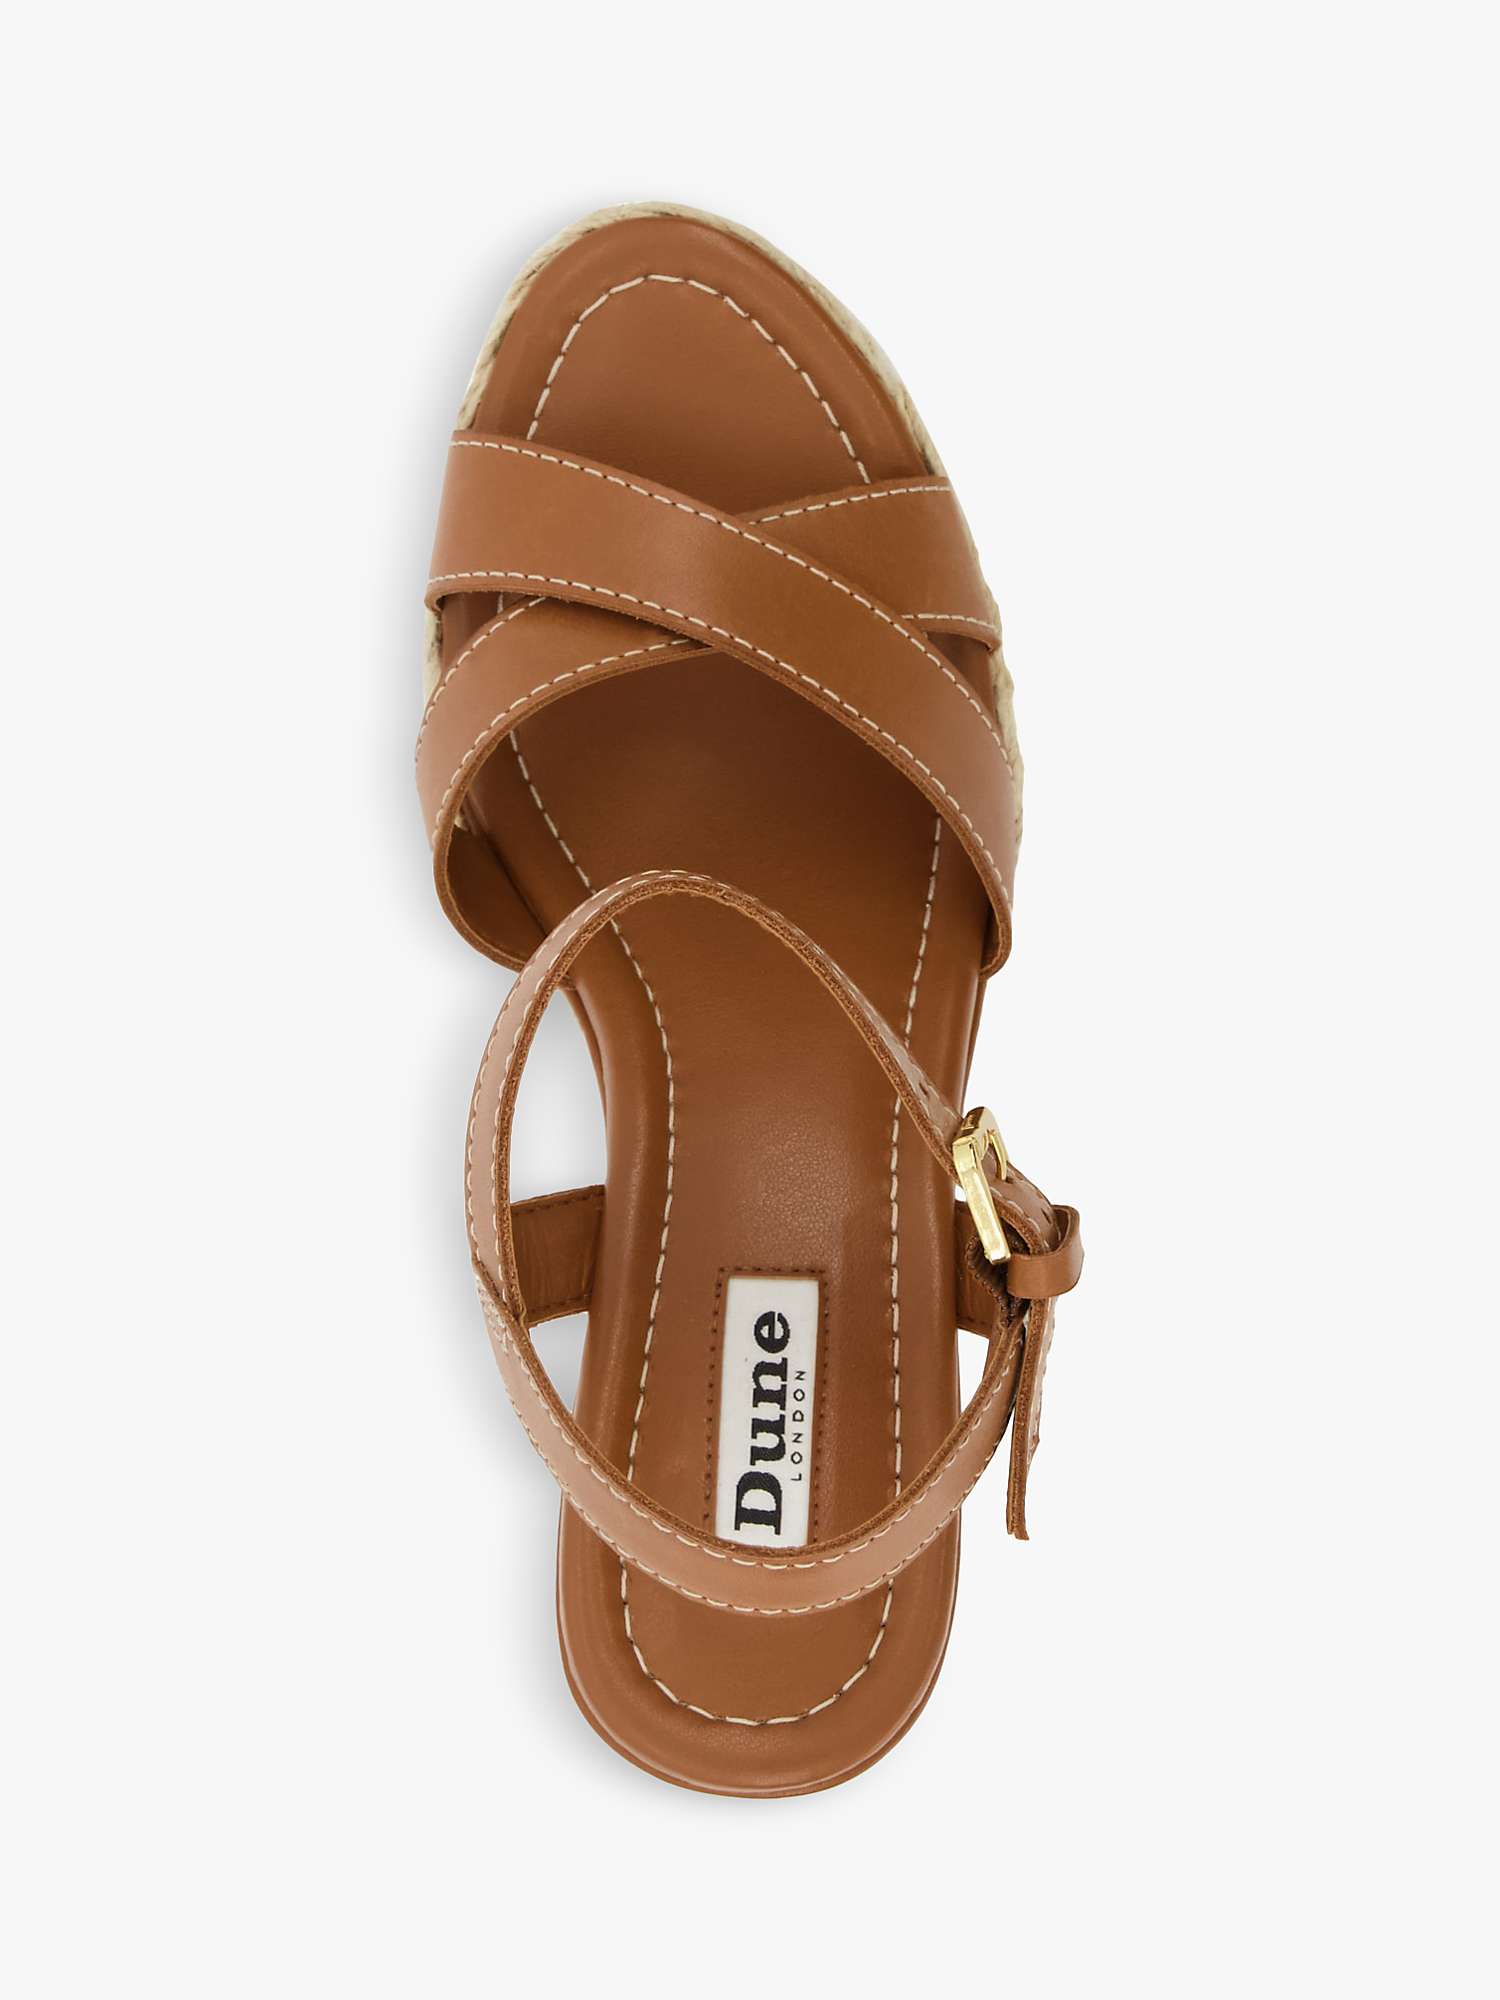 Buy Dune Kind Leather Espadrille Wedge Heel Sandals, Tan Online at johnlewis.com